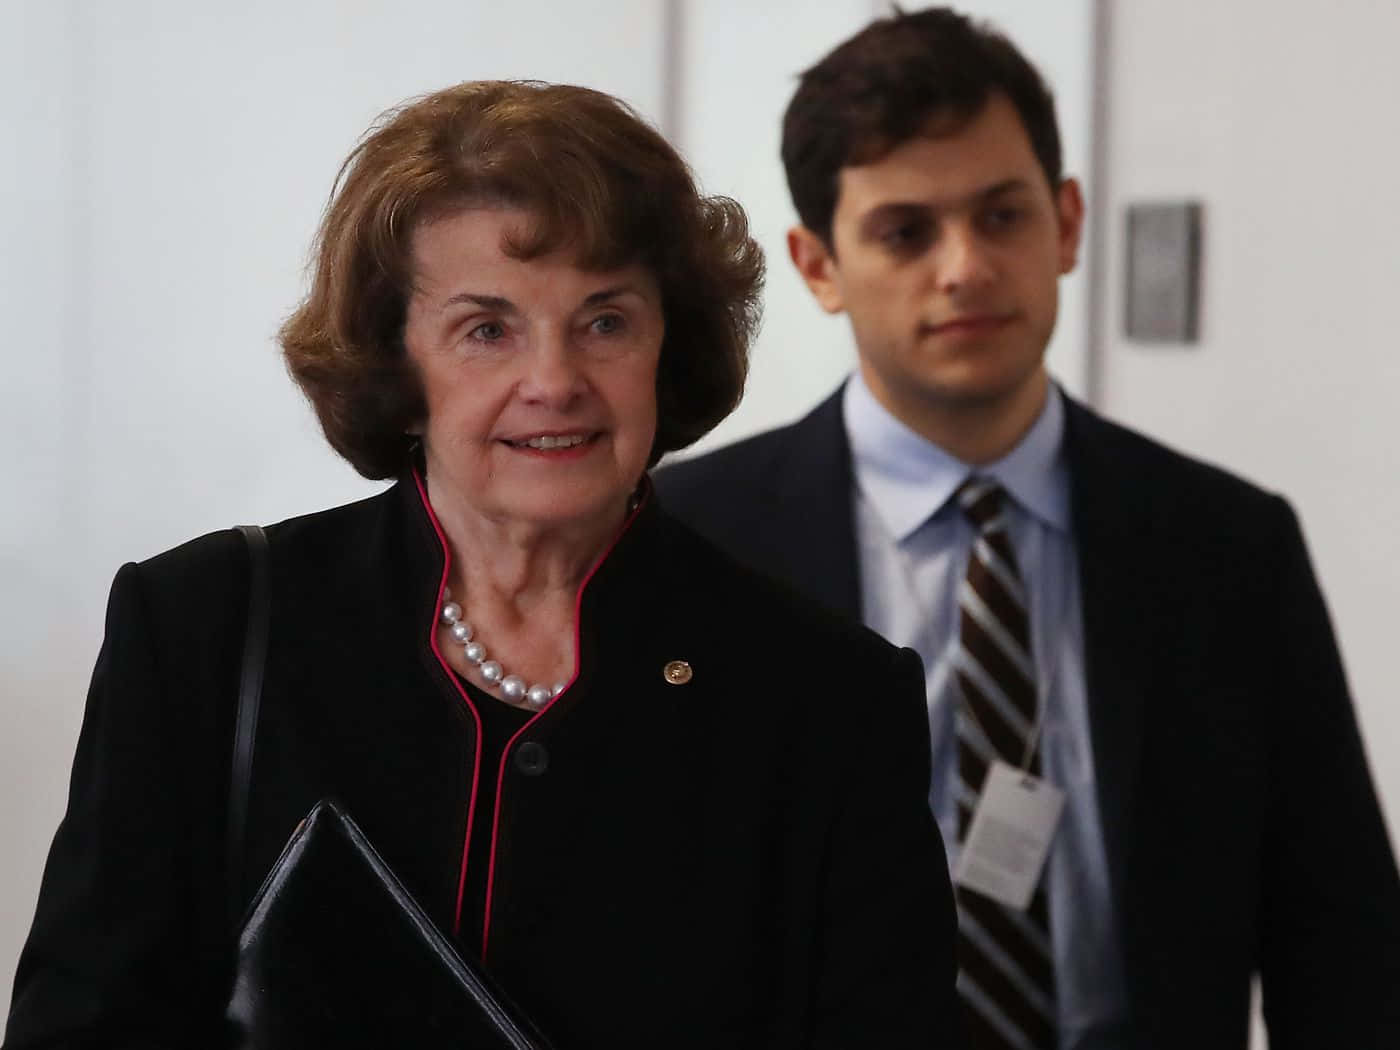 Senior U.S. Senator Dianne Feinstein Accompanied by a Bodyguard Wallpaper